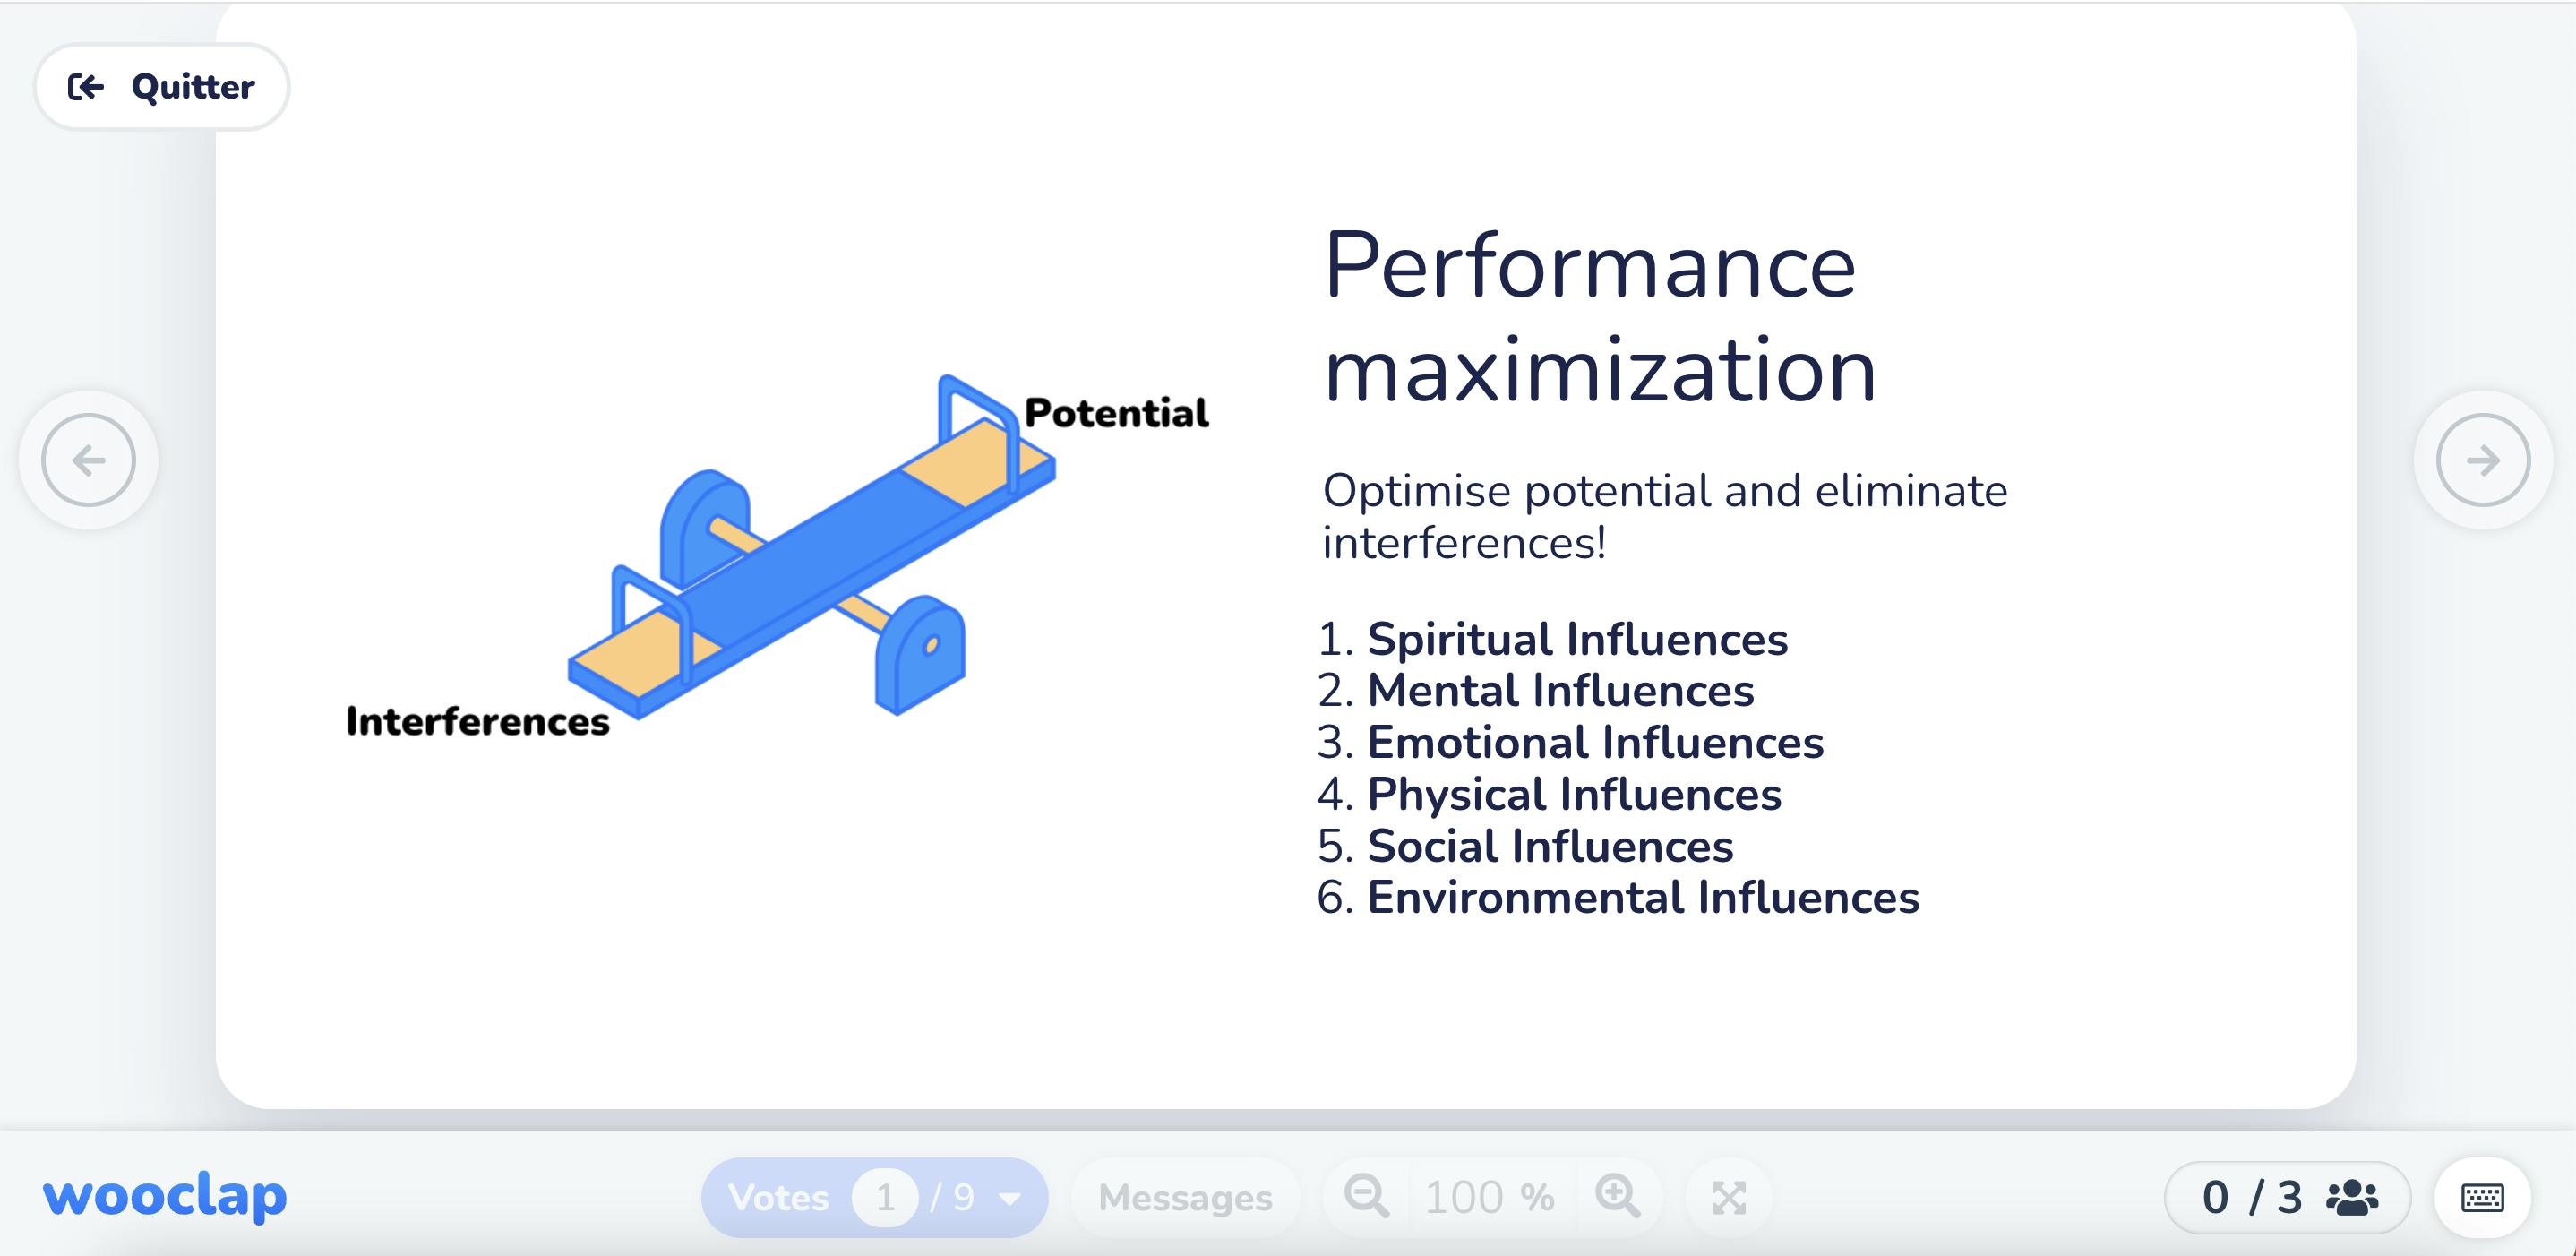 Performance maximization